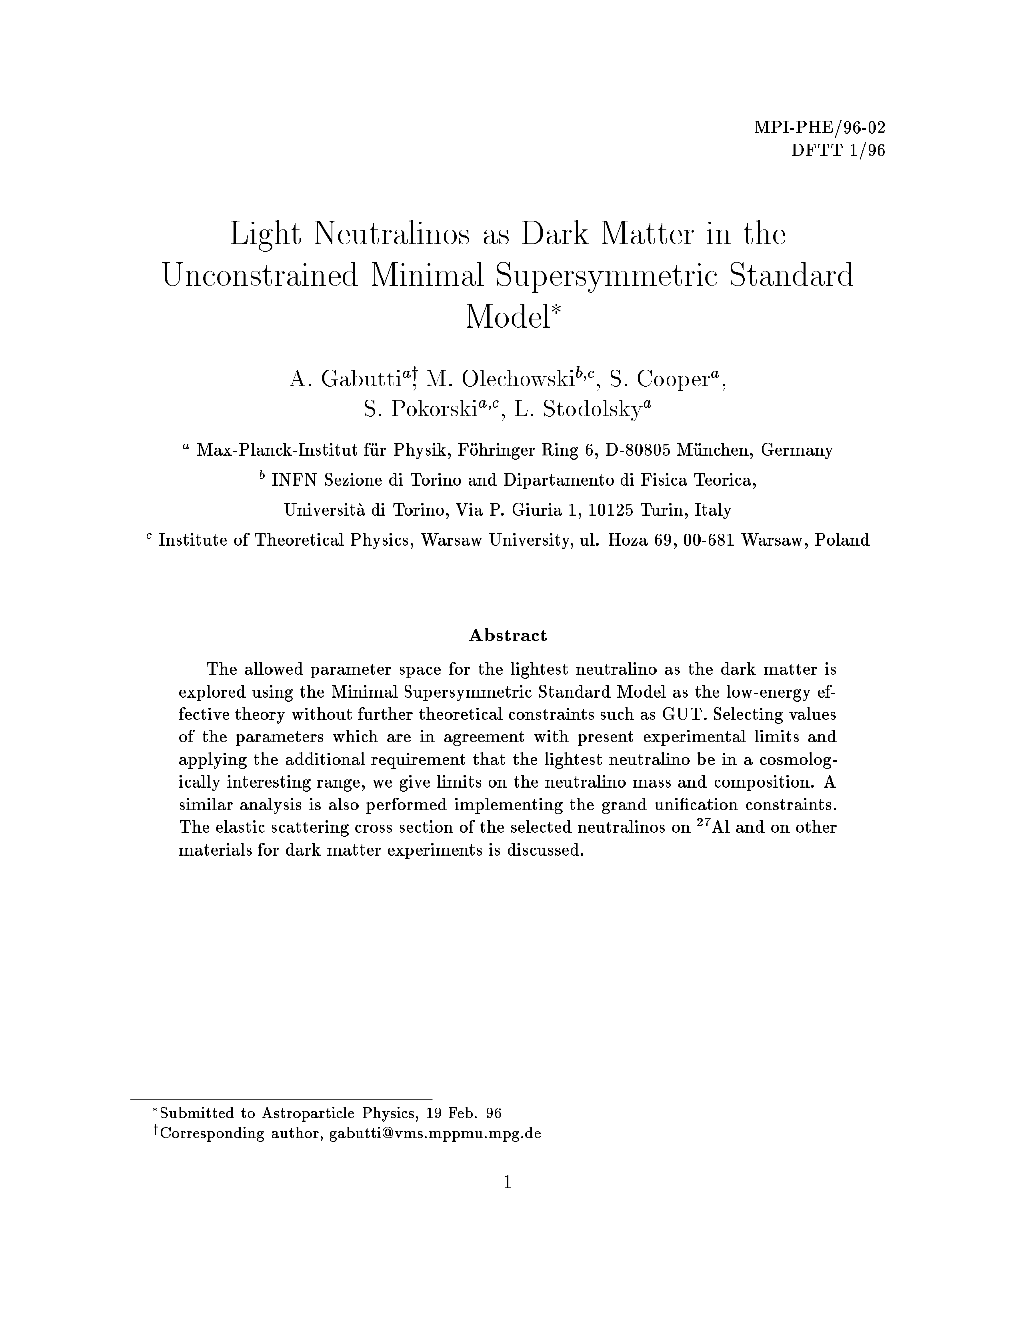 Light Neutralinos As Dark Matter in the Unconstrained Minimal